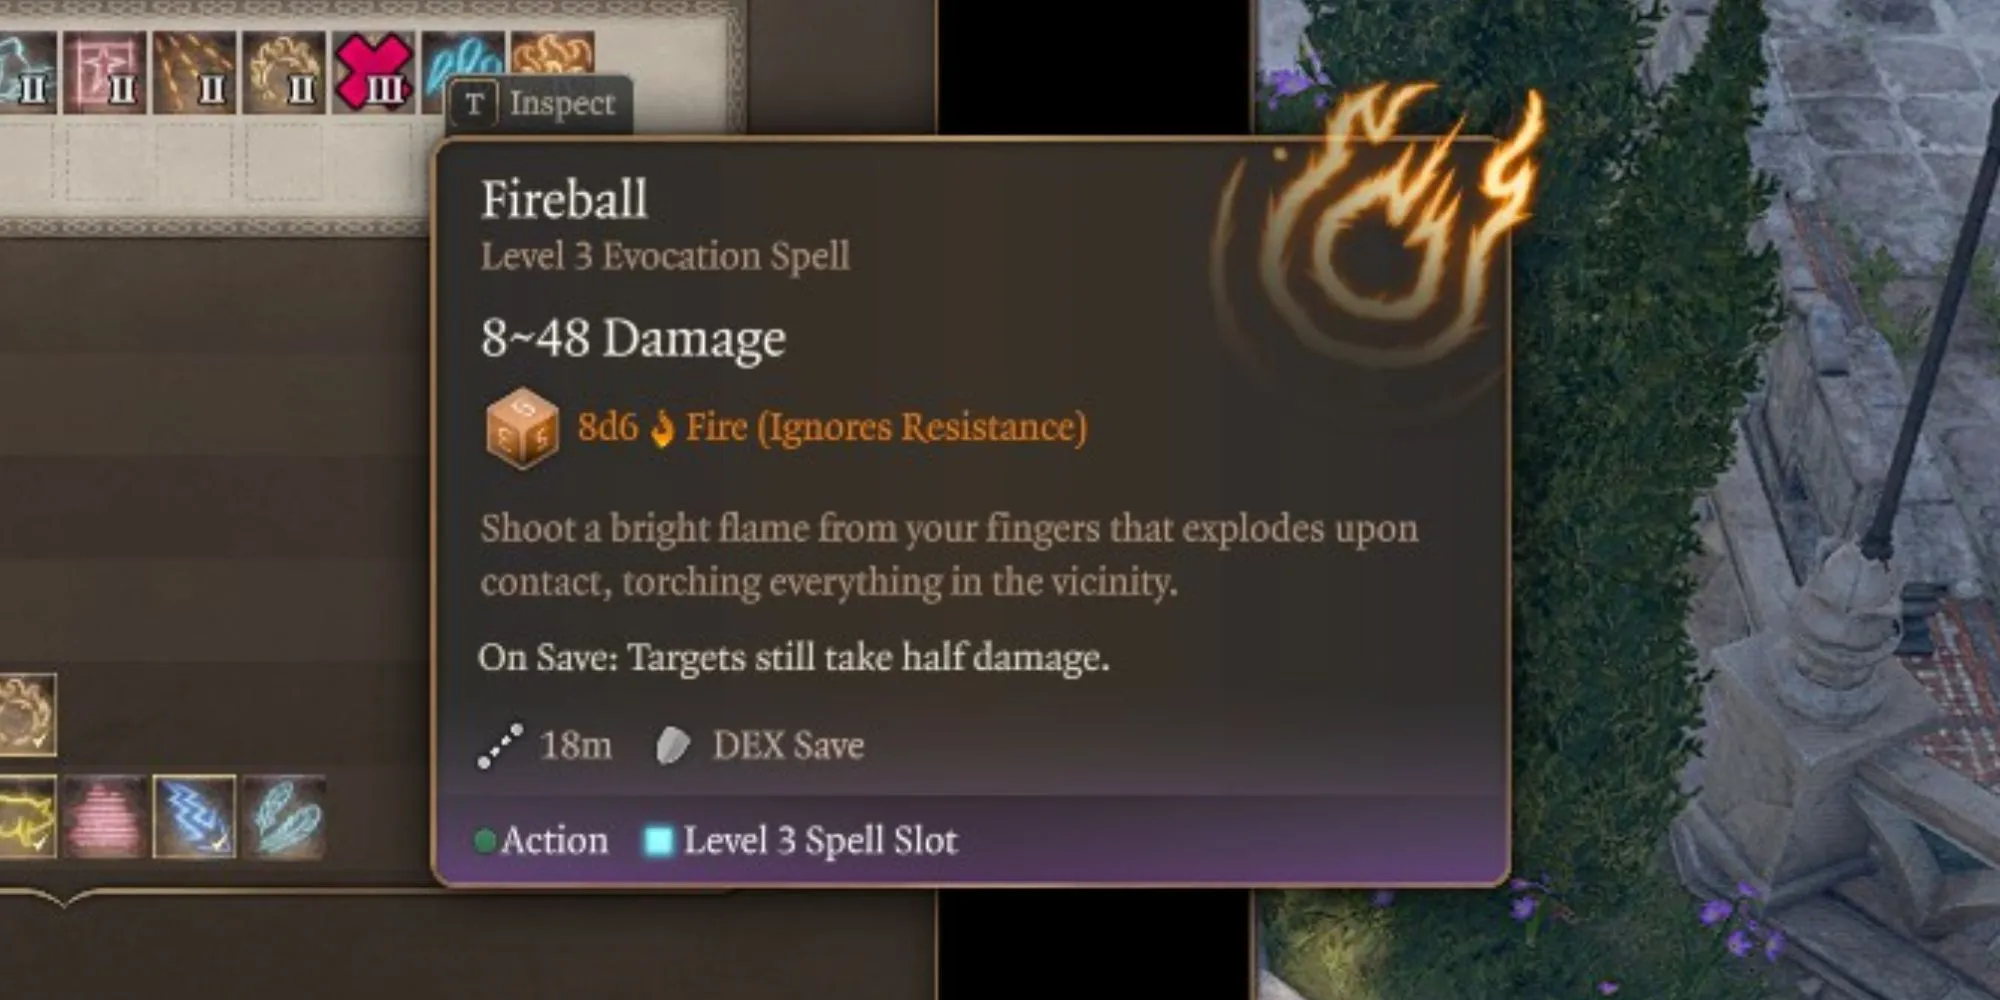 The Fireball spell in Baldur’s Gate 3